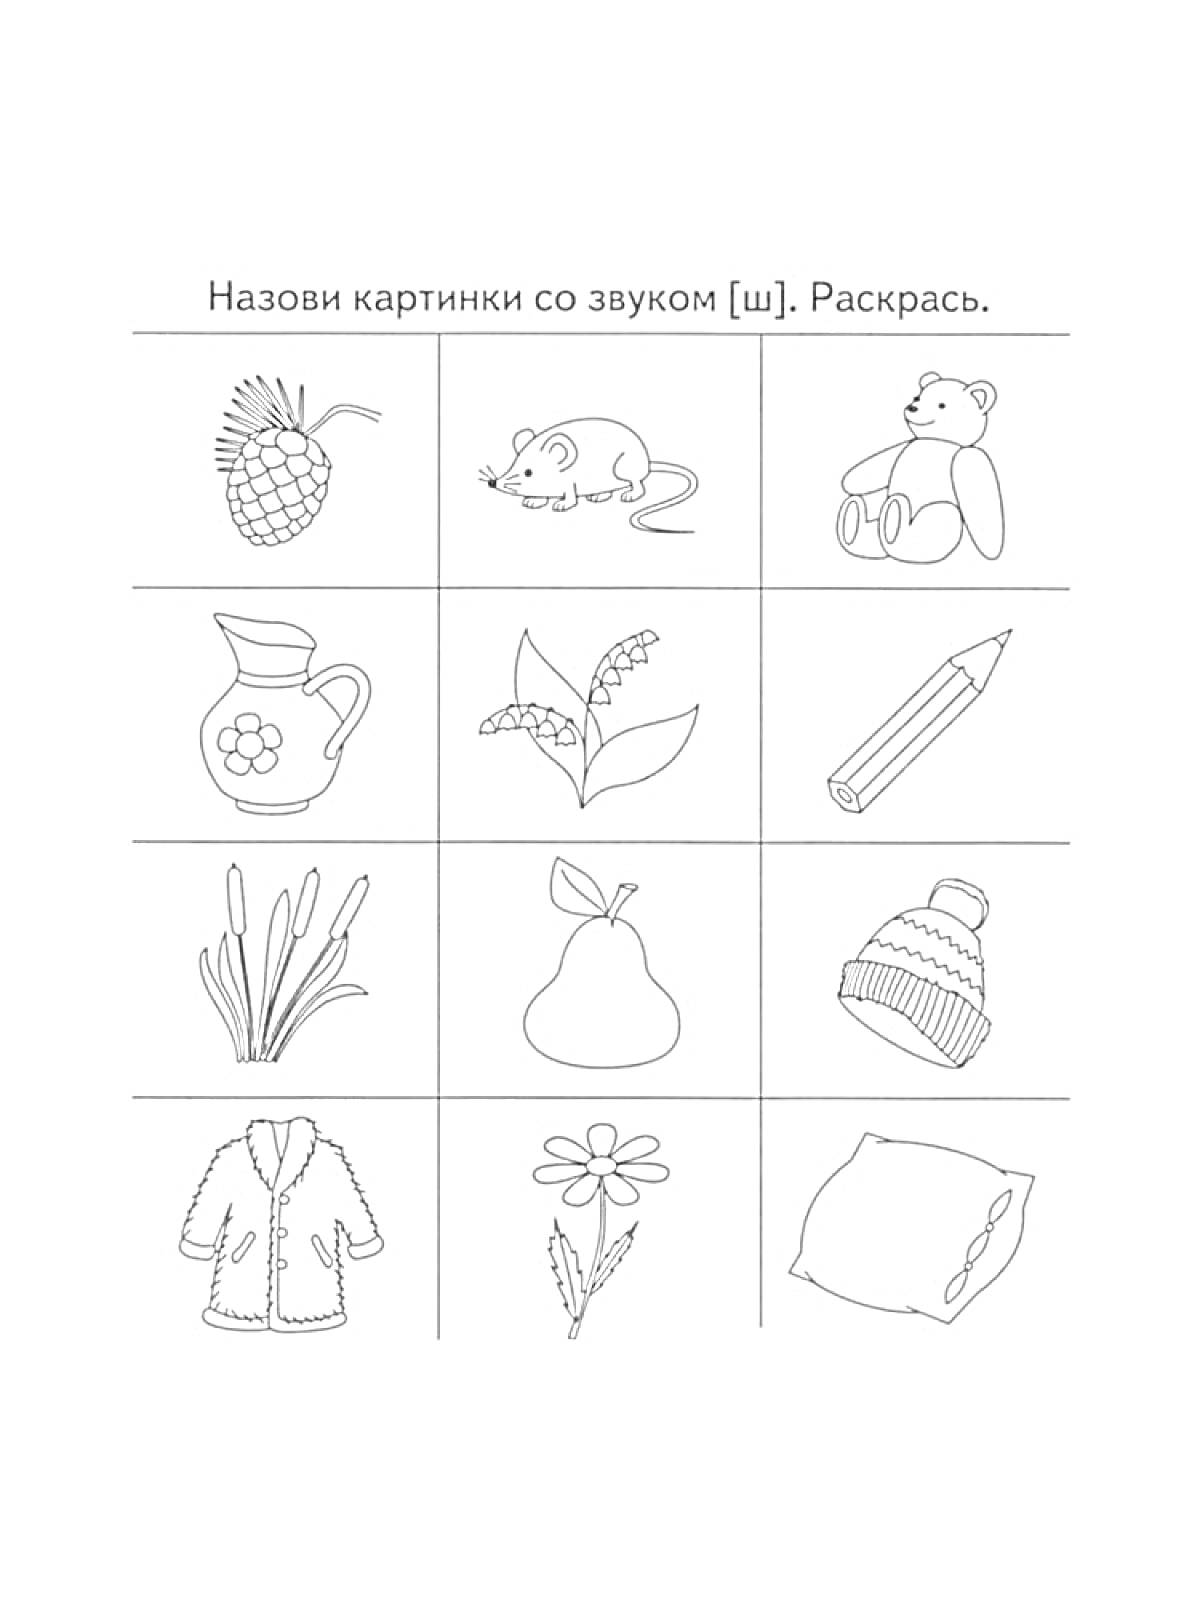 Раскраска Логопедическая раскраска с картинками для звука [ш], включающая ананас, мышь, мишка, кувшин, ландыш, карандаш, камыши, груша, шапка, кардиган, цветок и подушка